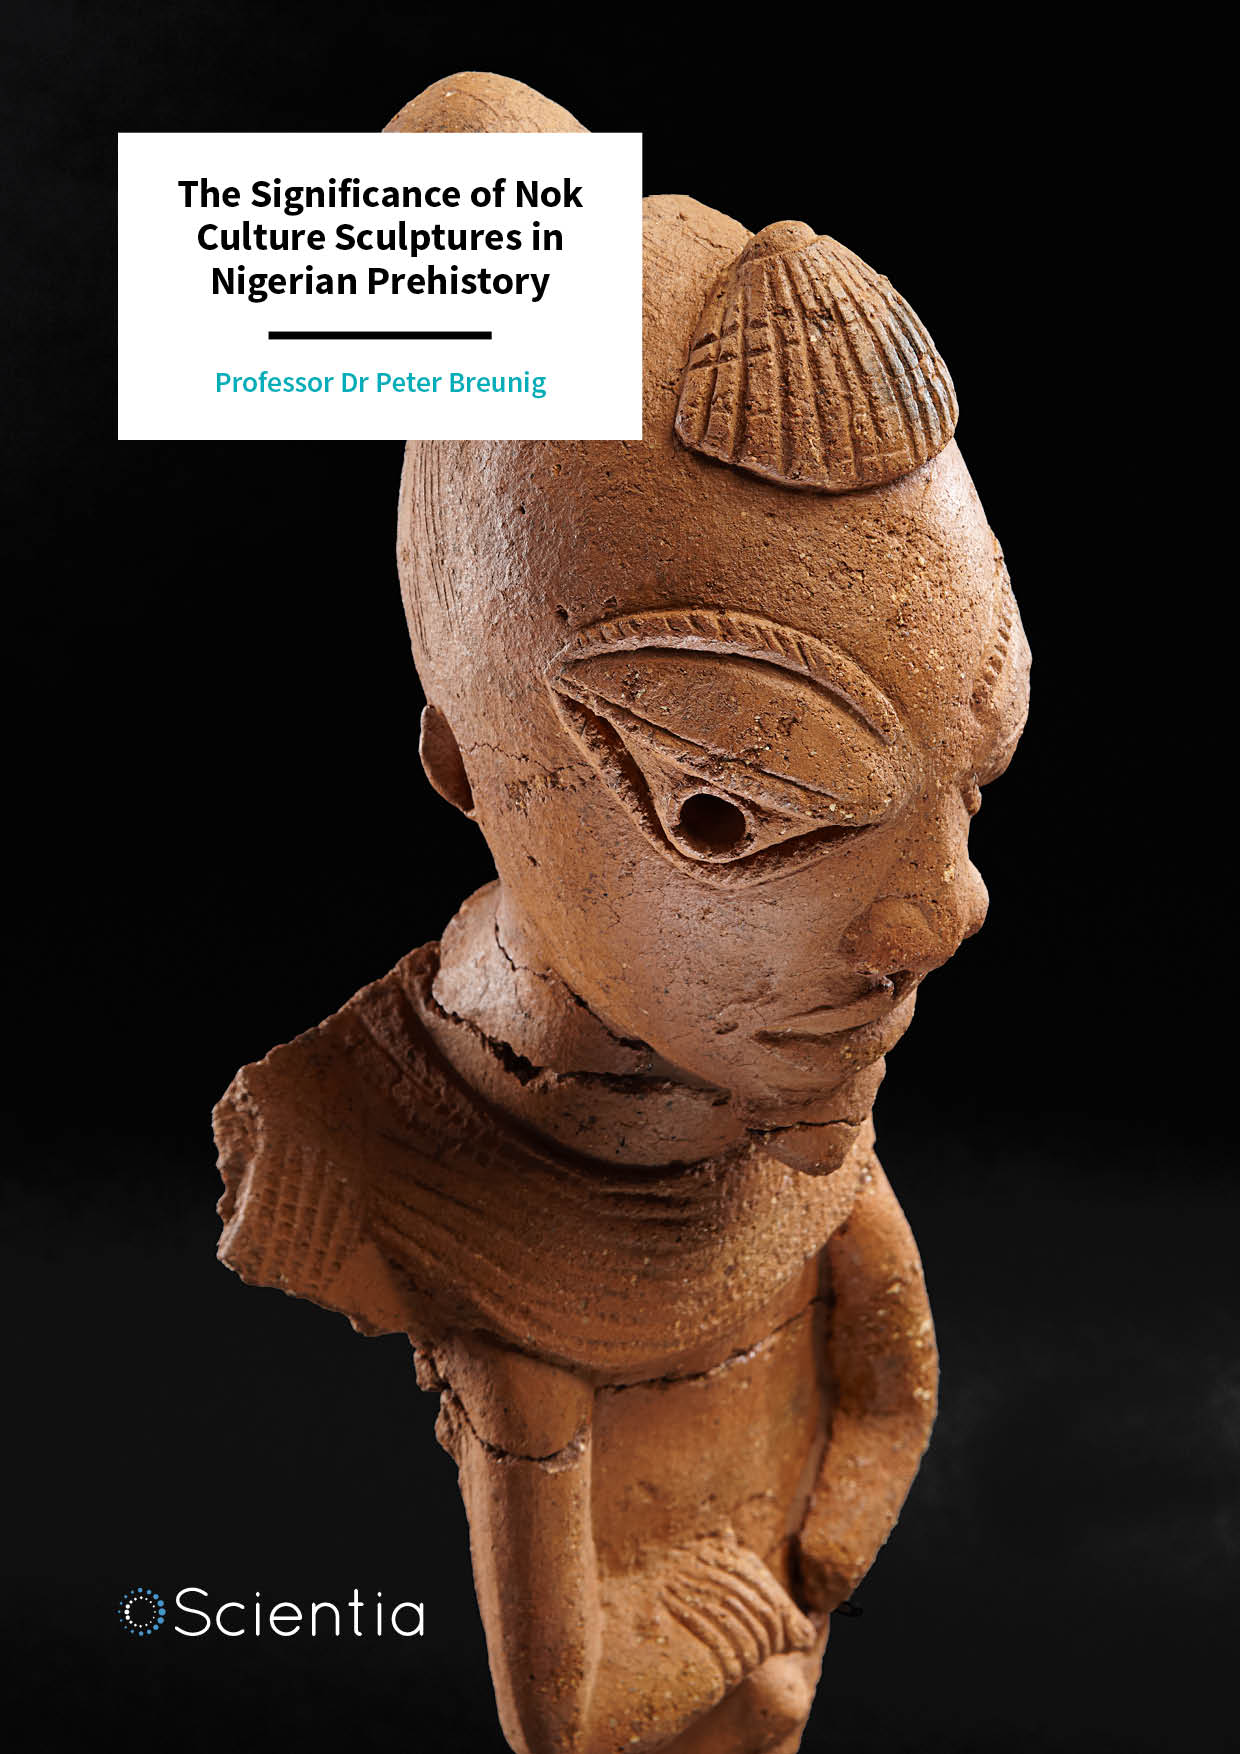 The Discovery of Nigeria's Nok Culture